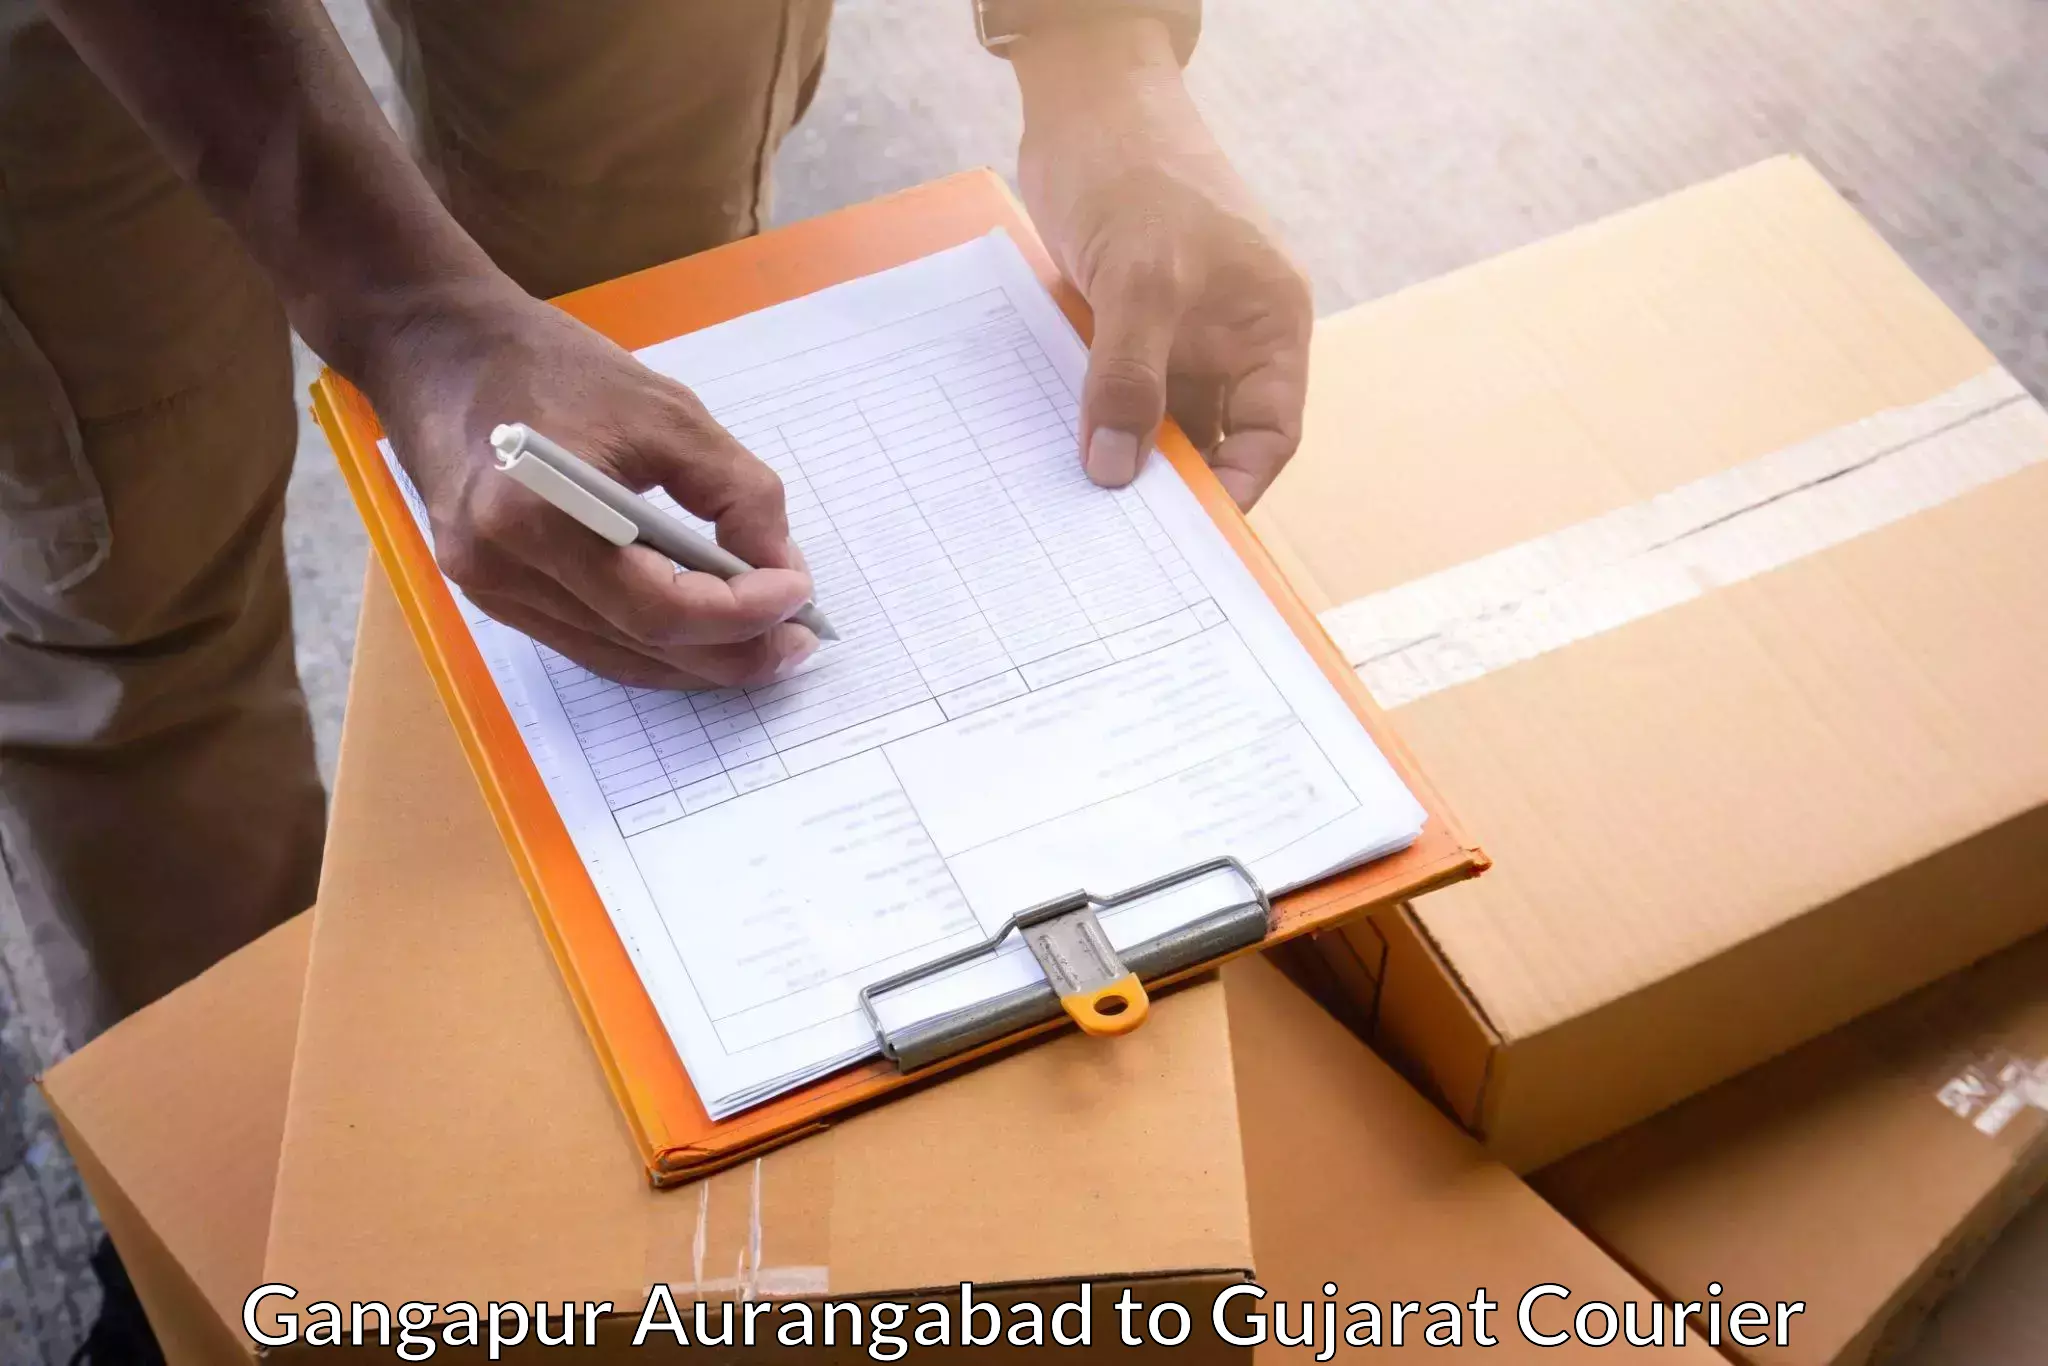 Custom courier packaging Gangapur Aurangabad to Surat